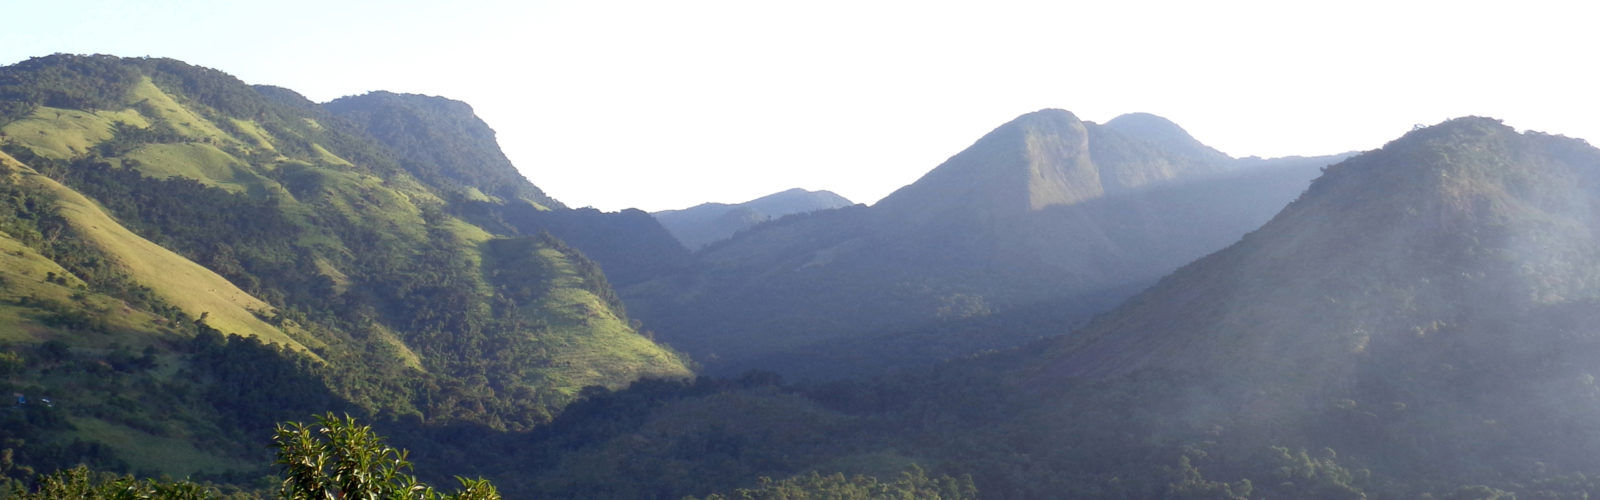 mountains-near-paraty-brazil